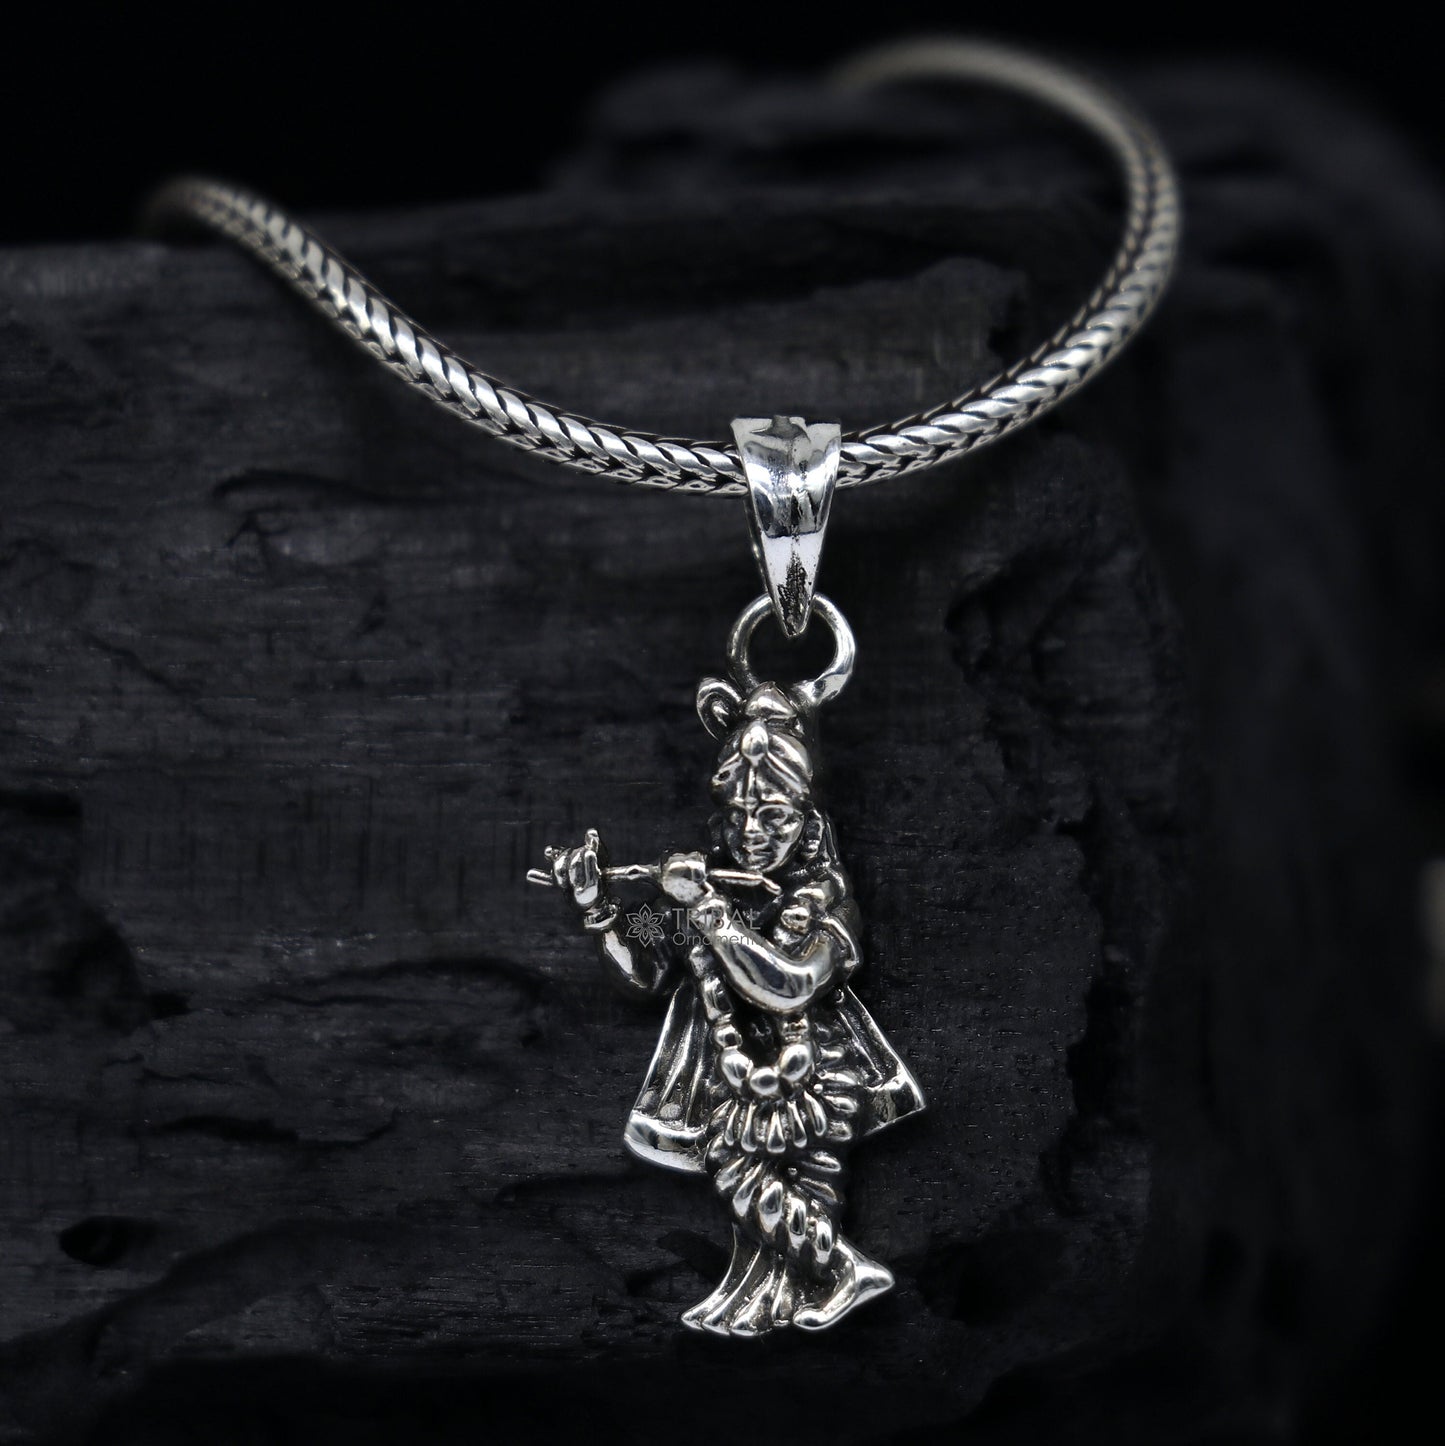 Lord Krishna 925 sterling silver small pendant, Lord Krishna Pendant is a symbol of love, wisdom, and spiritual devotion unisex gift nsp661 - TRIBAL ORNAMENTS